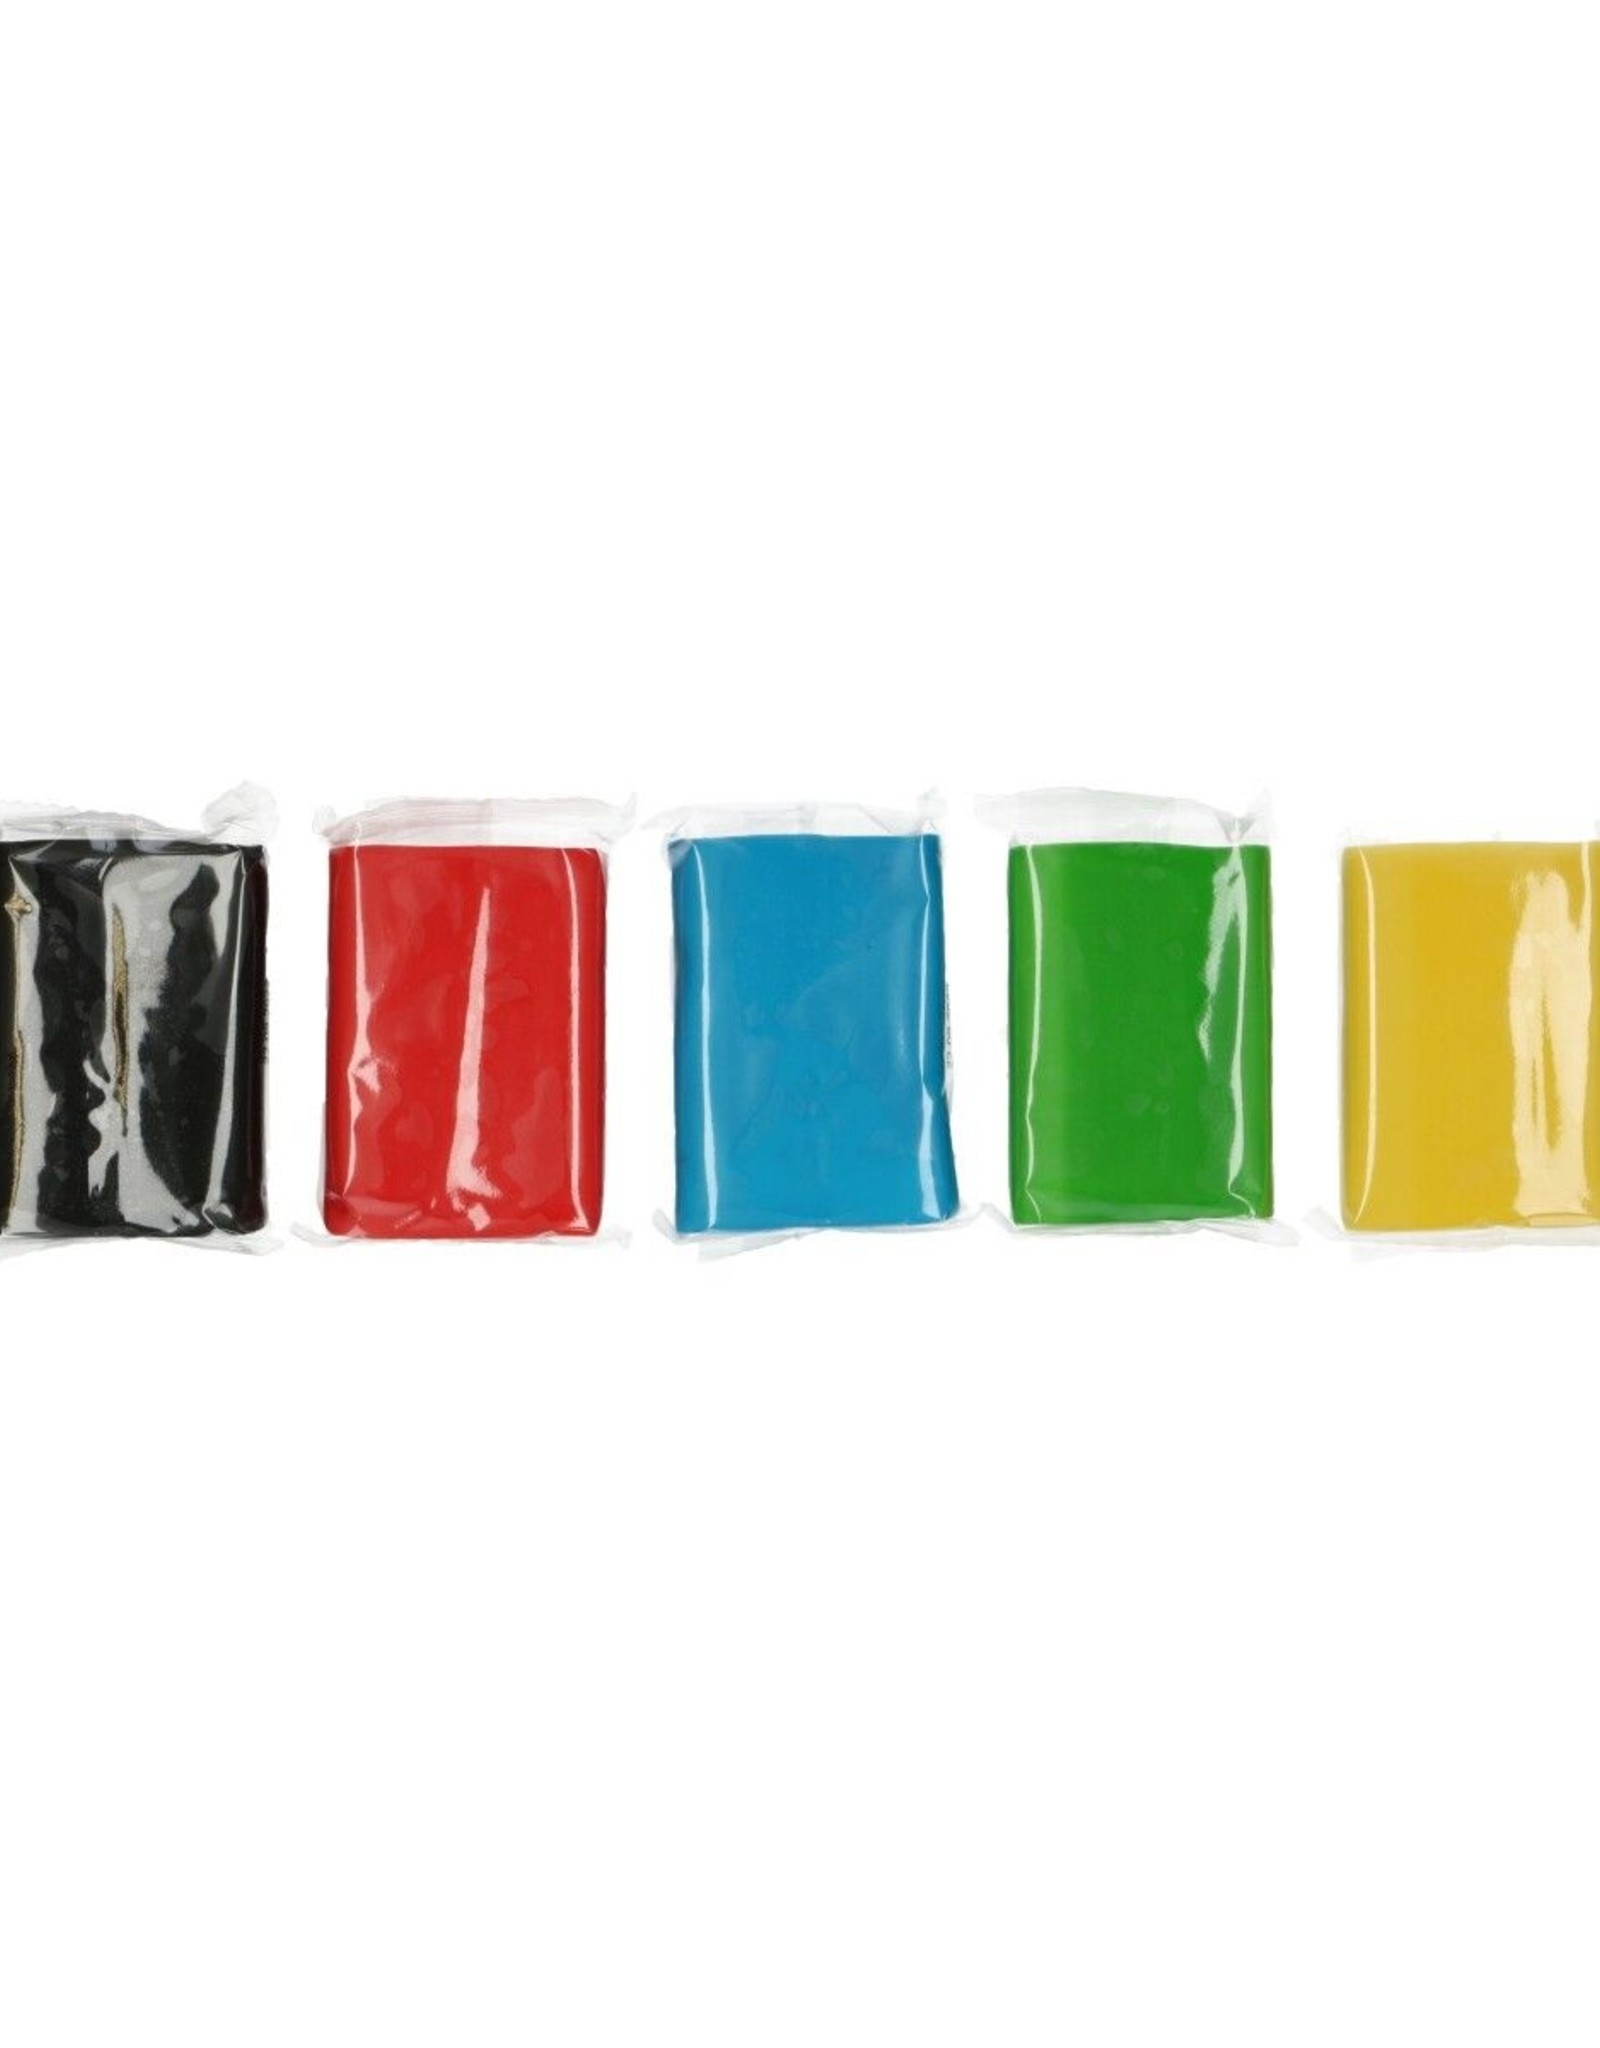 FunCakes FunCakes Rolfondant Multipack Essential Colours 5x100g